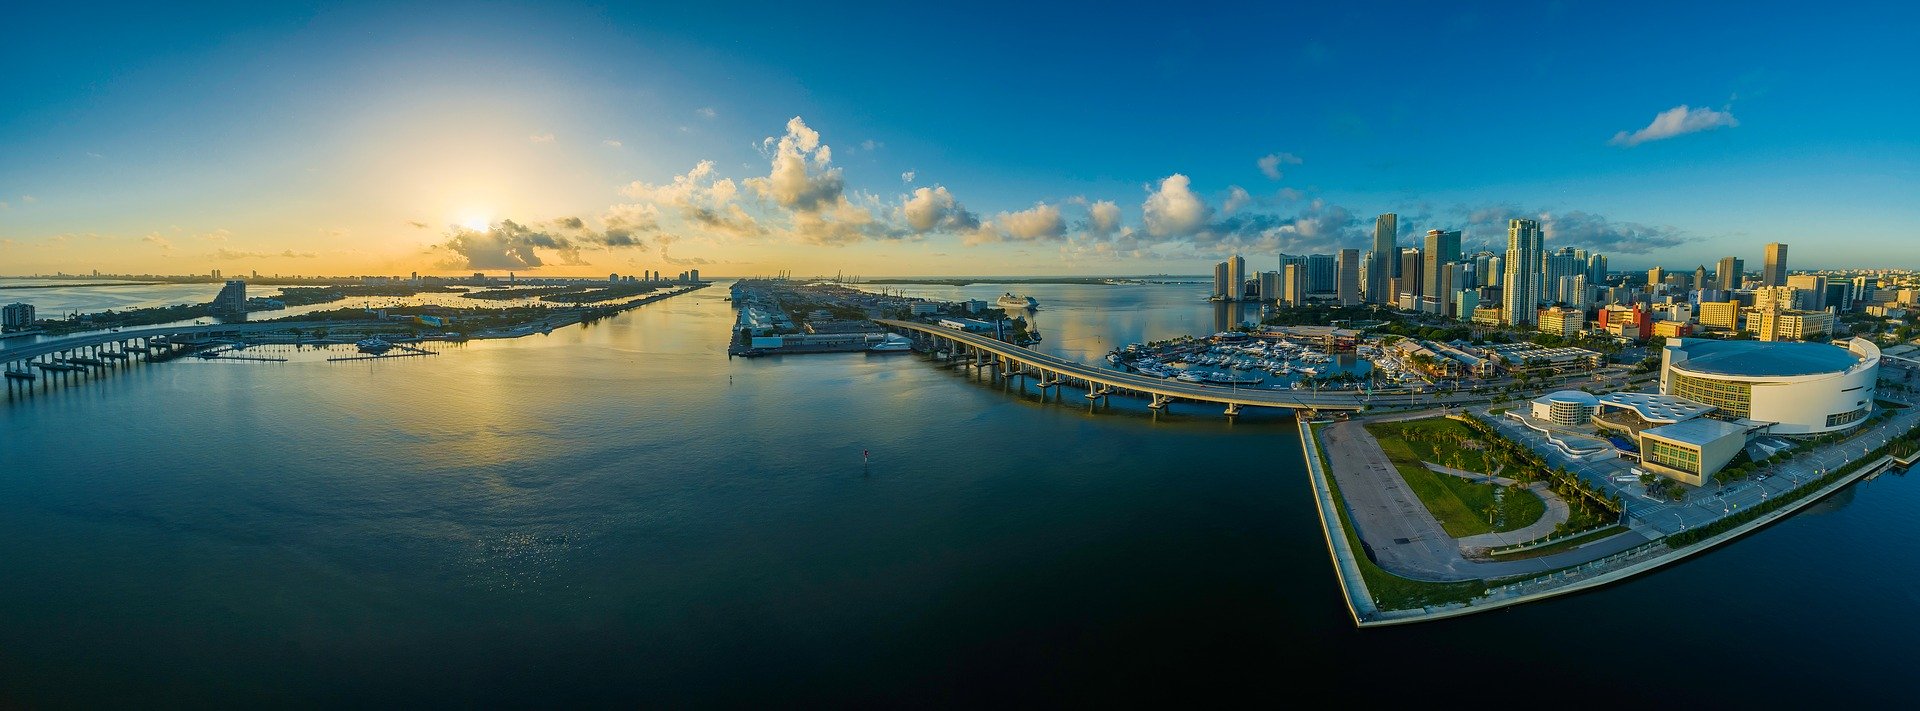 Panorama in Miami Florida